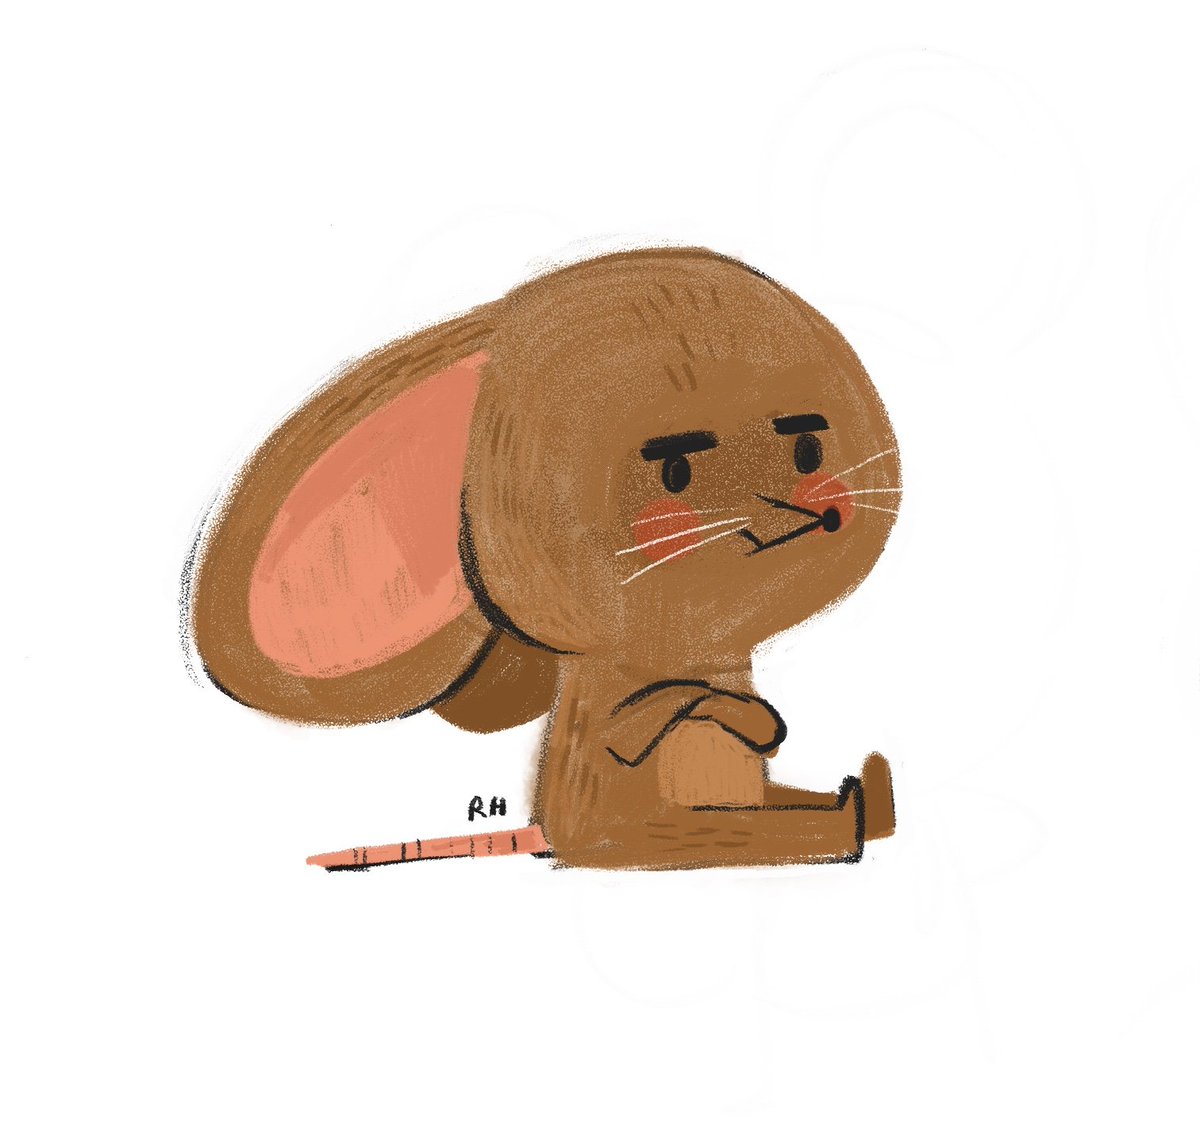 Grump

#characterdesign #illustration #doodle #kitlit